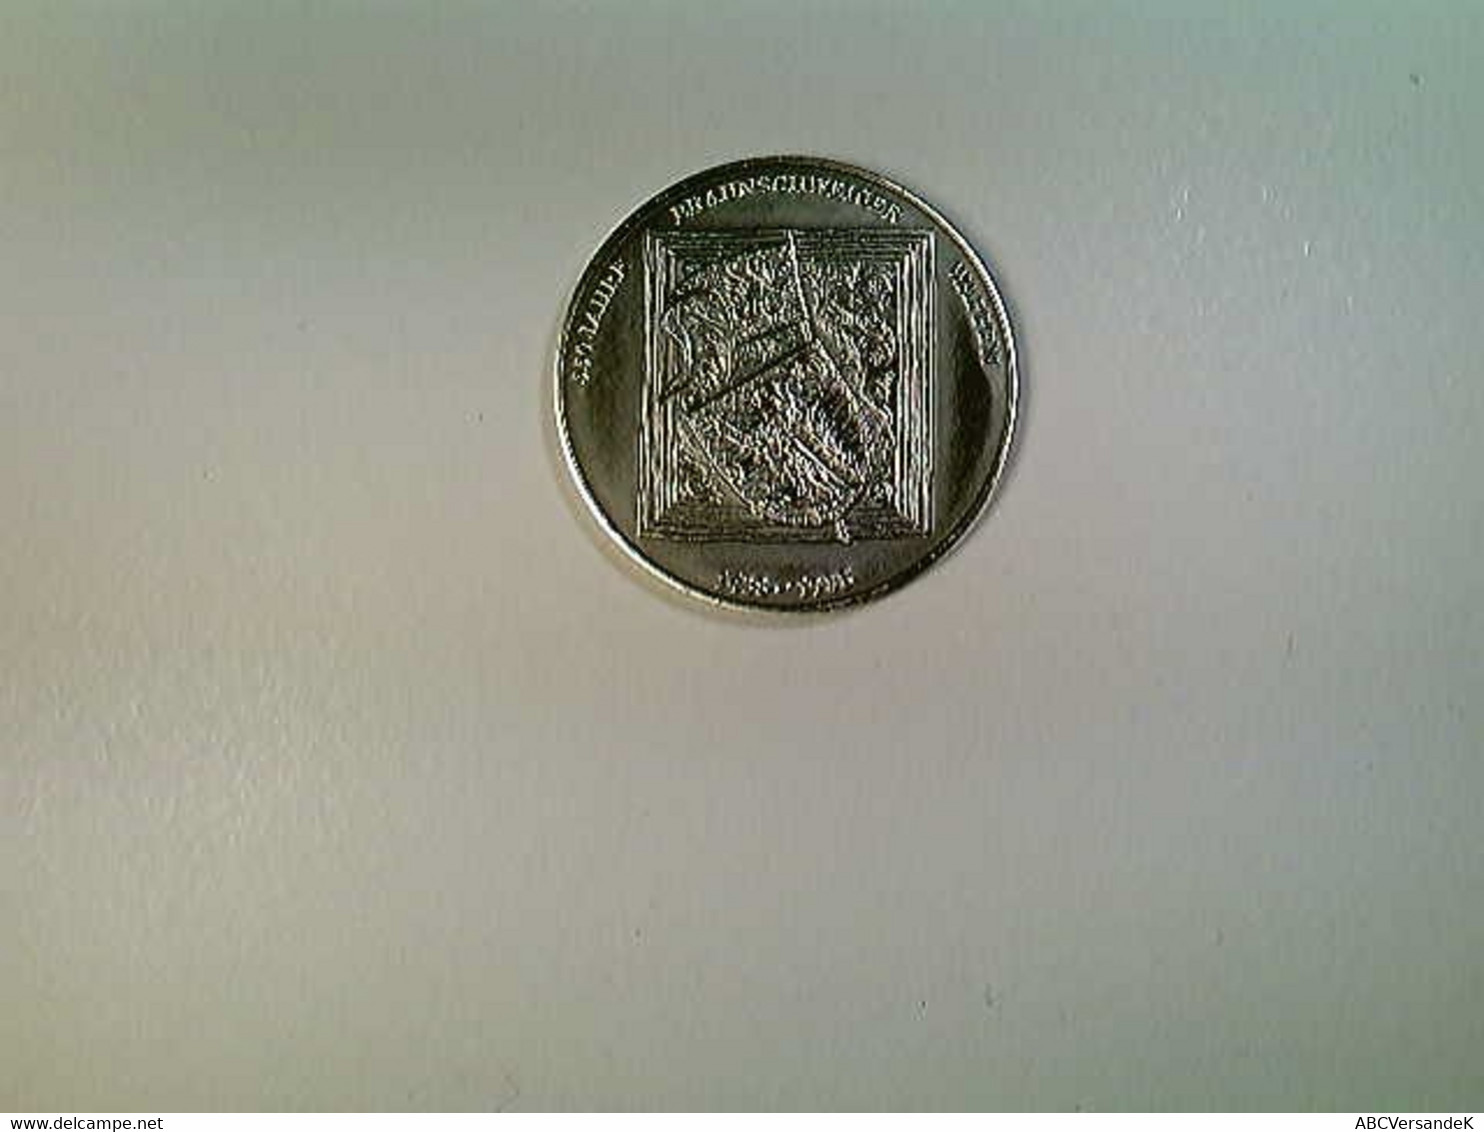 Medaille Braunschweig, Brunswick, 550 Jahre 1438-1988, Limitiert Nr. 167, Silber 999 - Numismatics